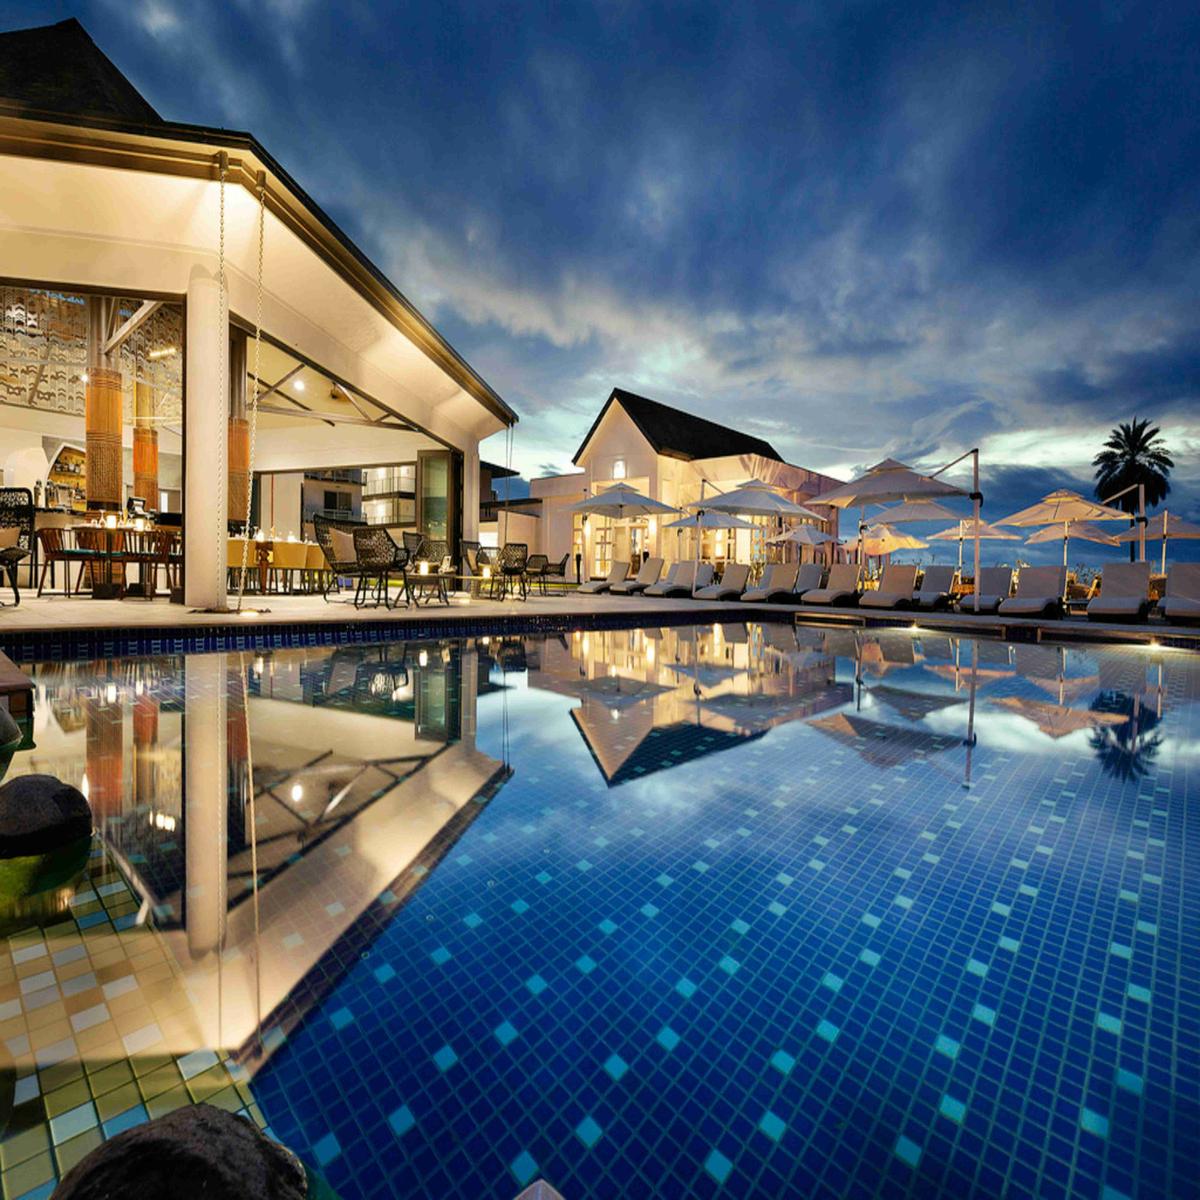 Luxury Resort Swimming Pool at Twilight